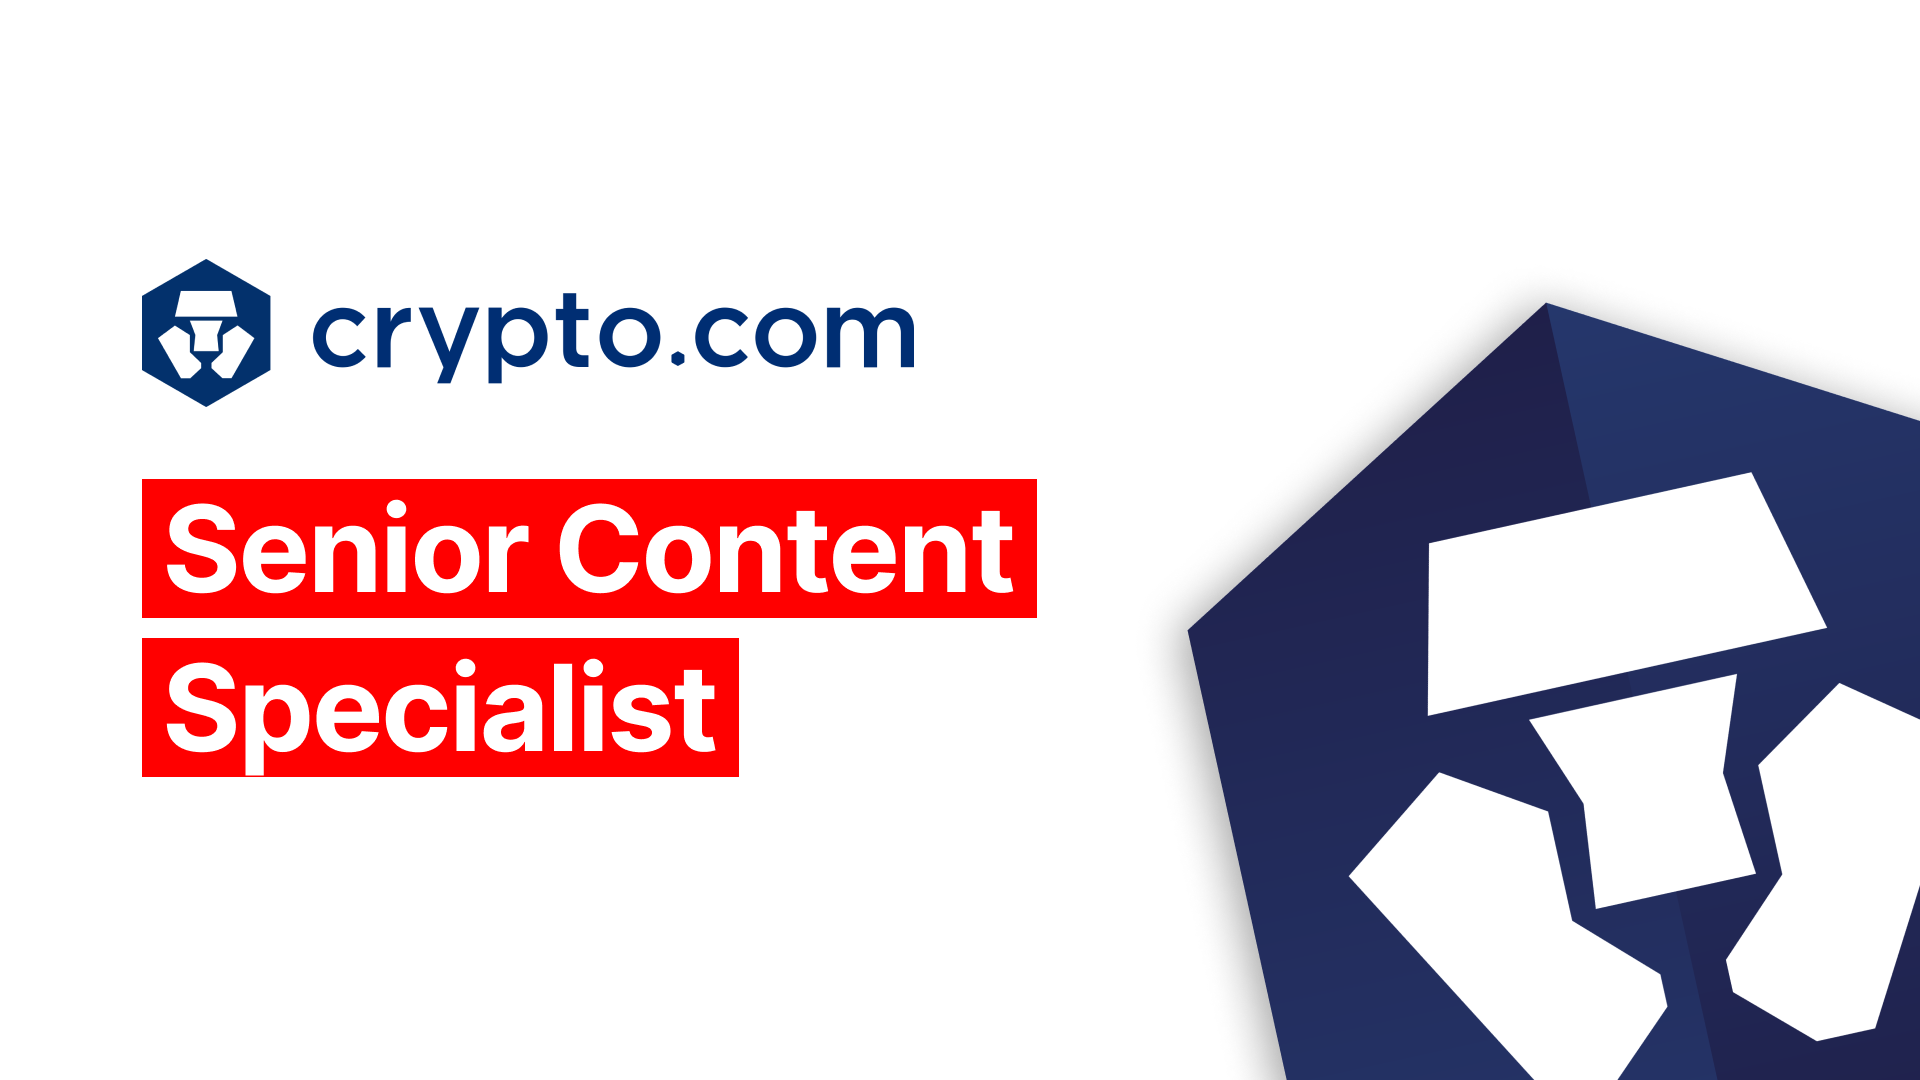 Crypto.com Is Hiring a Senior Content Specialist